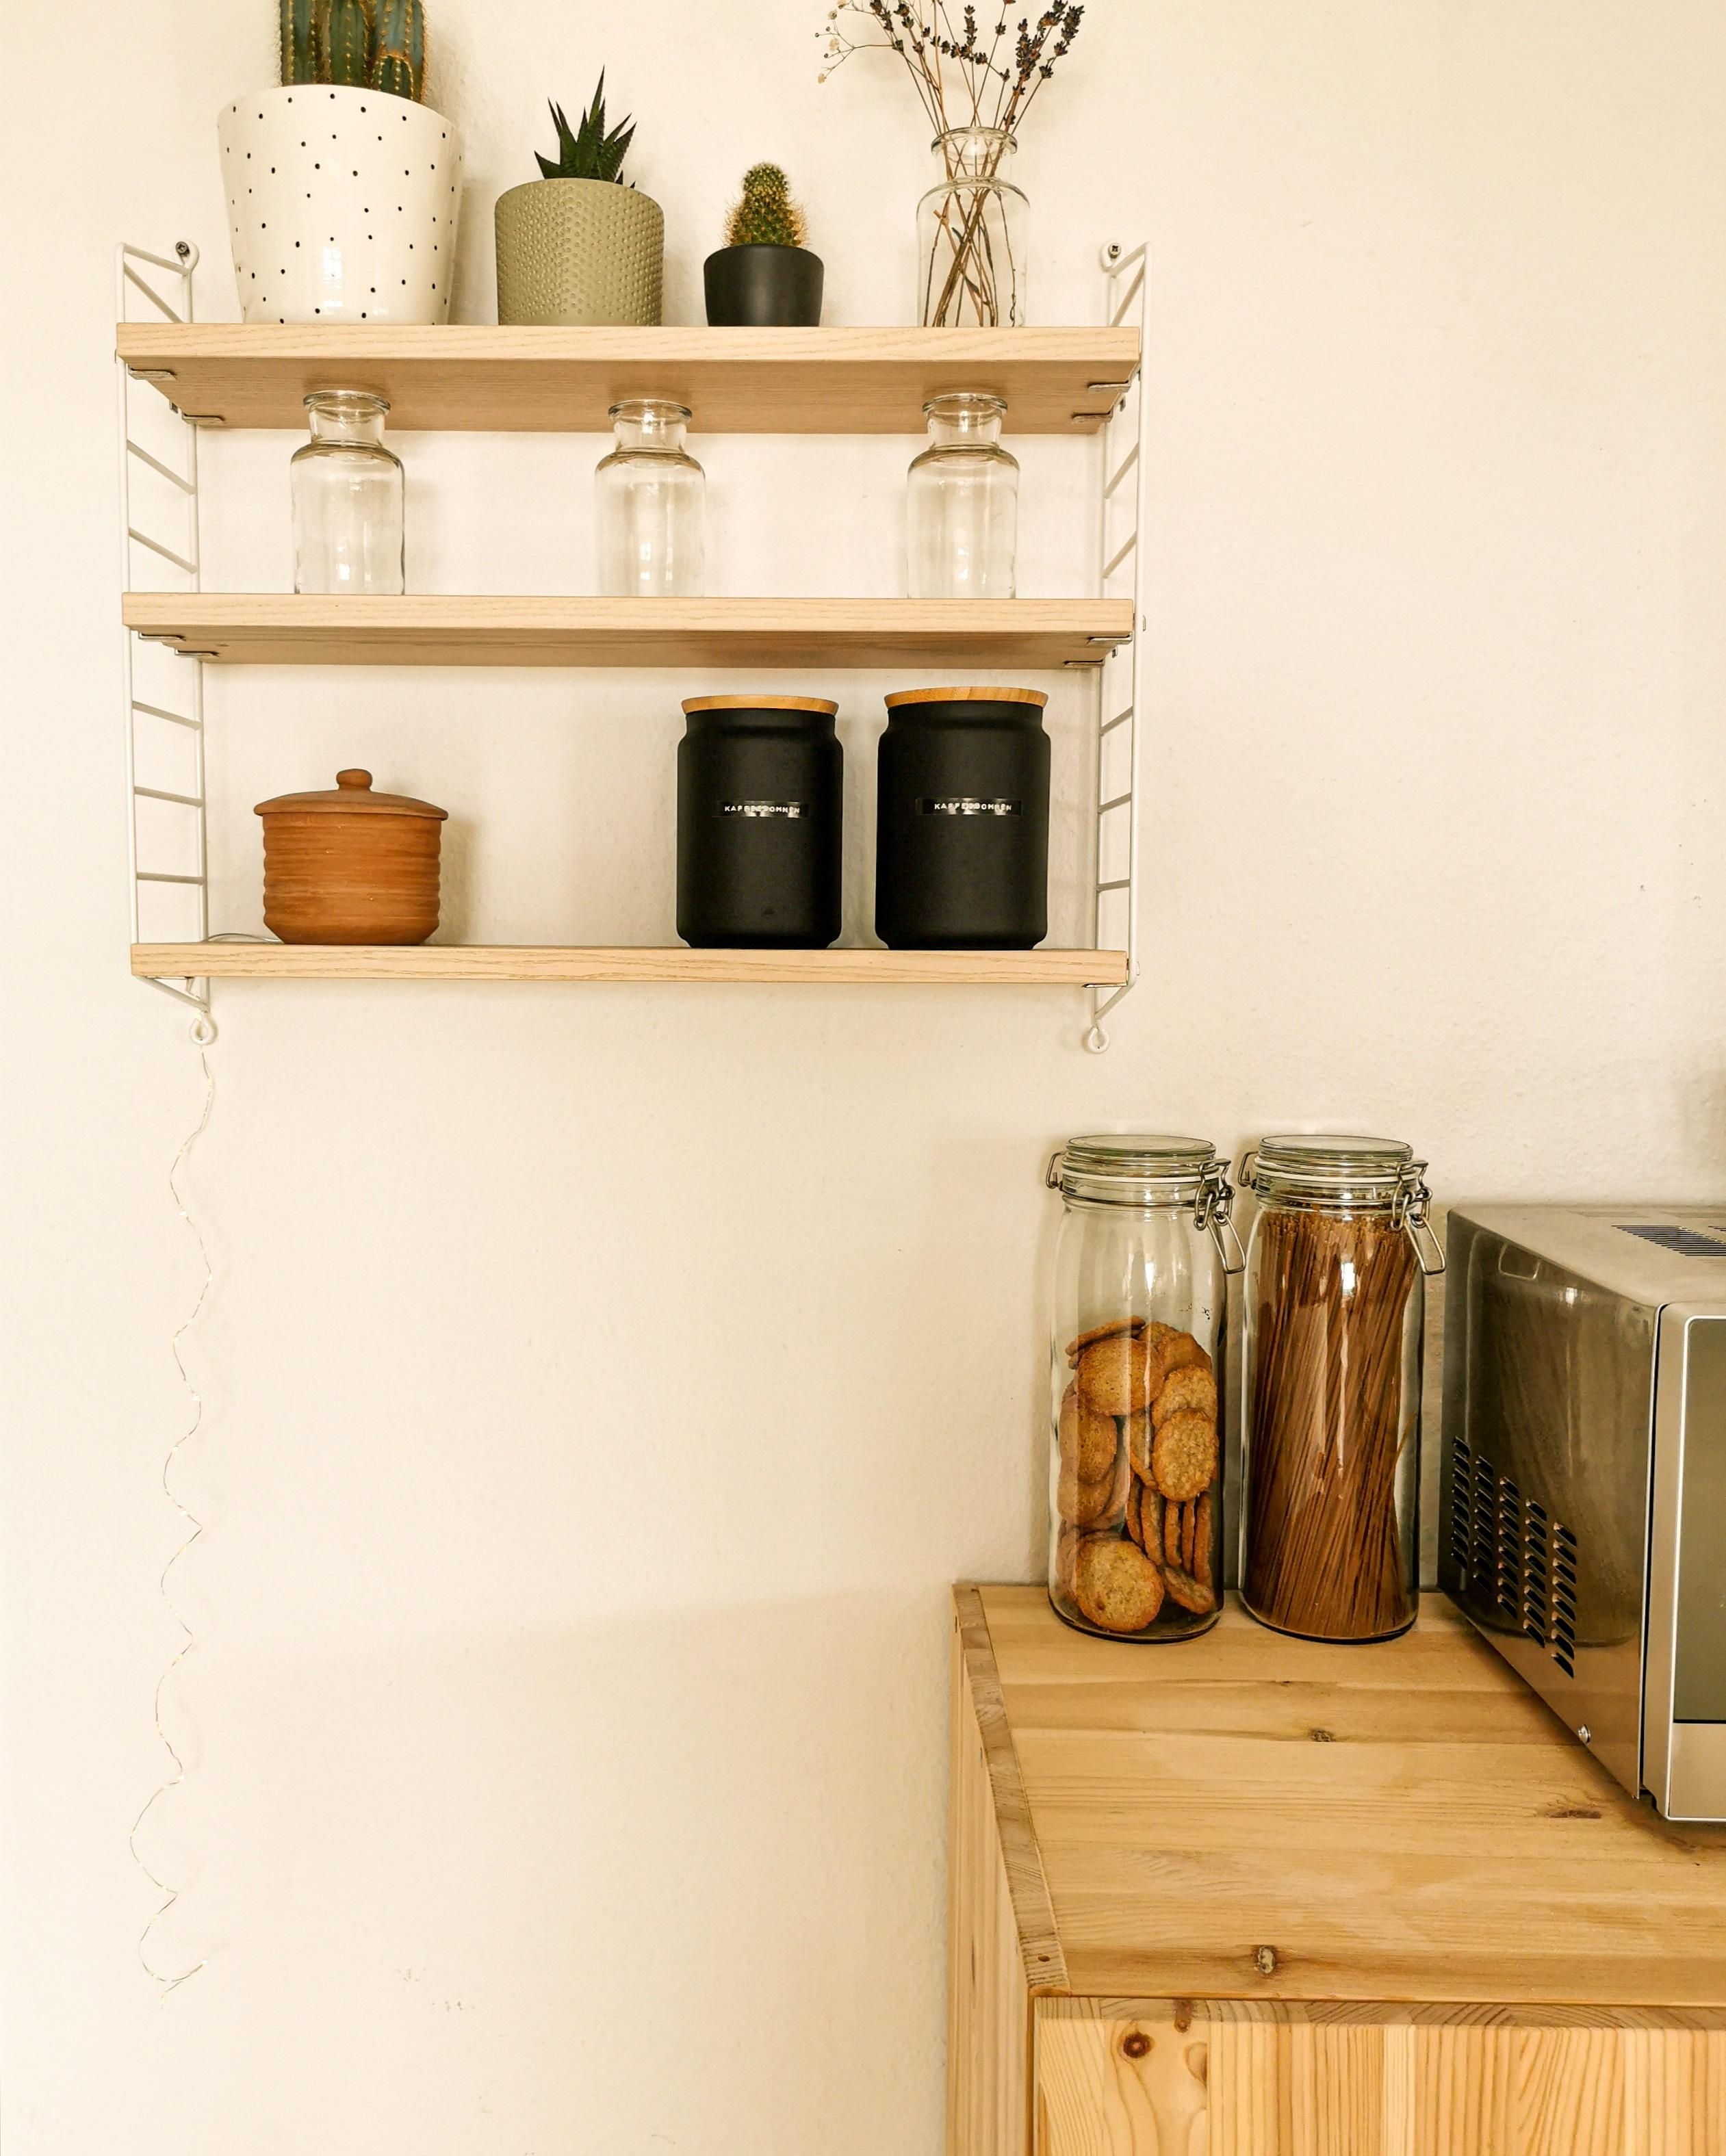 Shelfie.
#stringfurniture #stringregal #kitchen #kitcheninspiration #kücheninspo #wooden #wood 